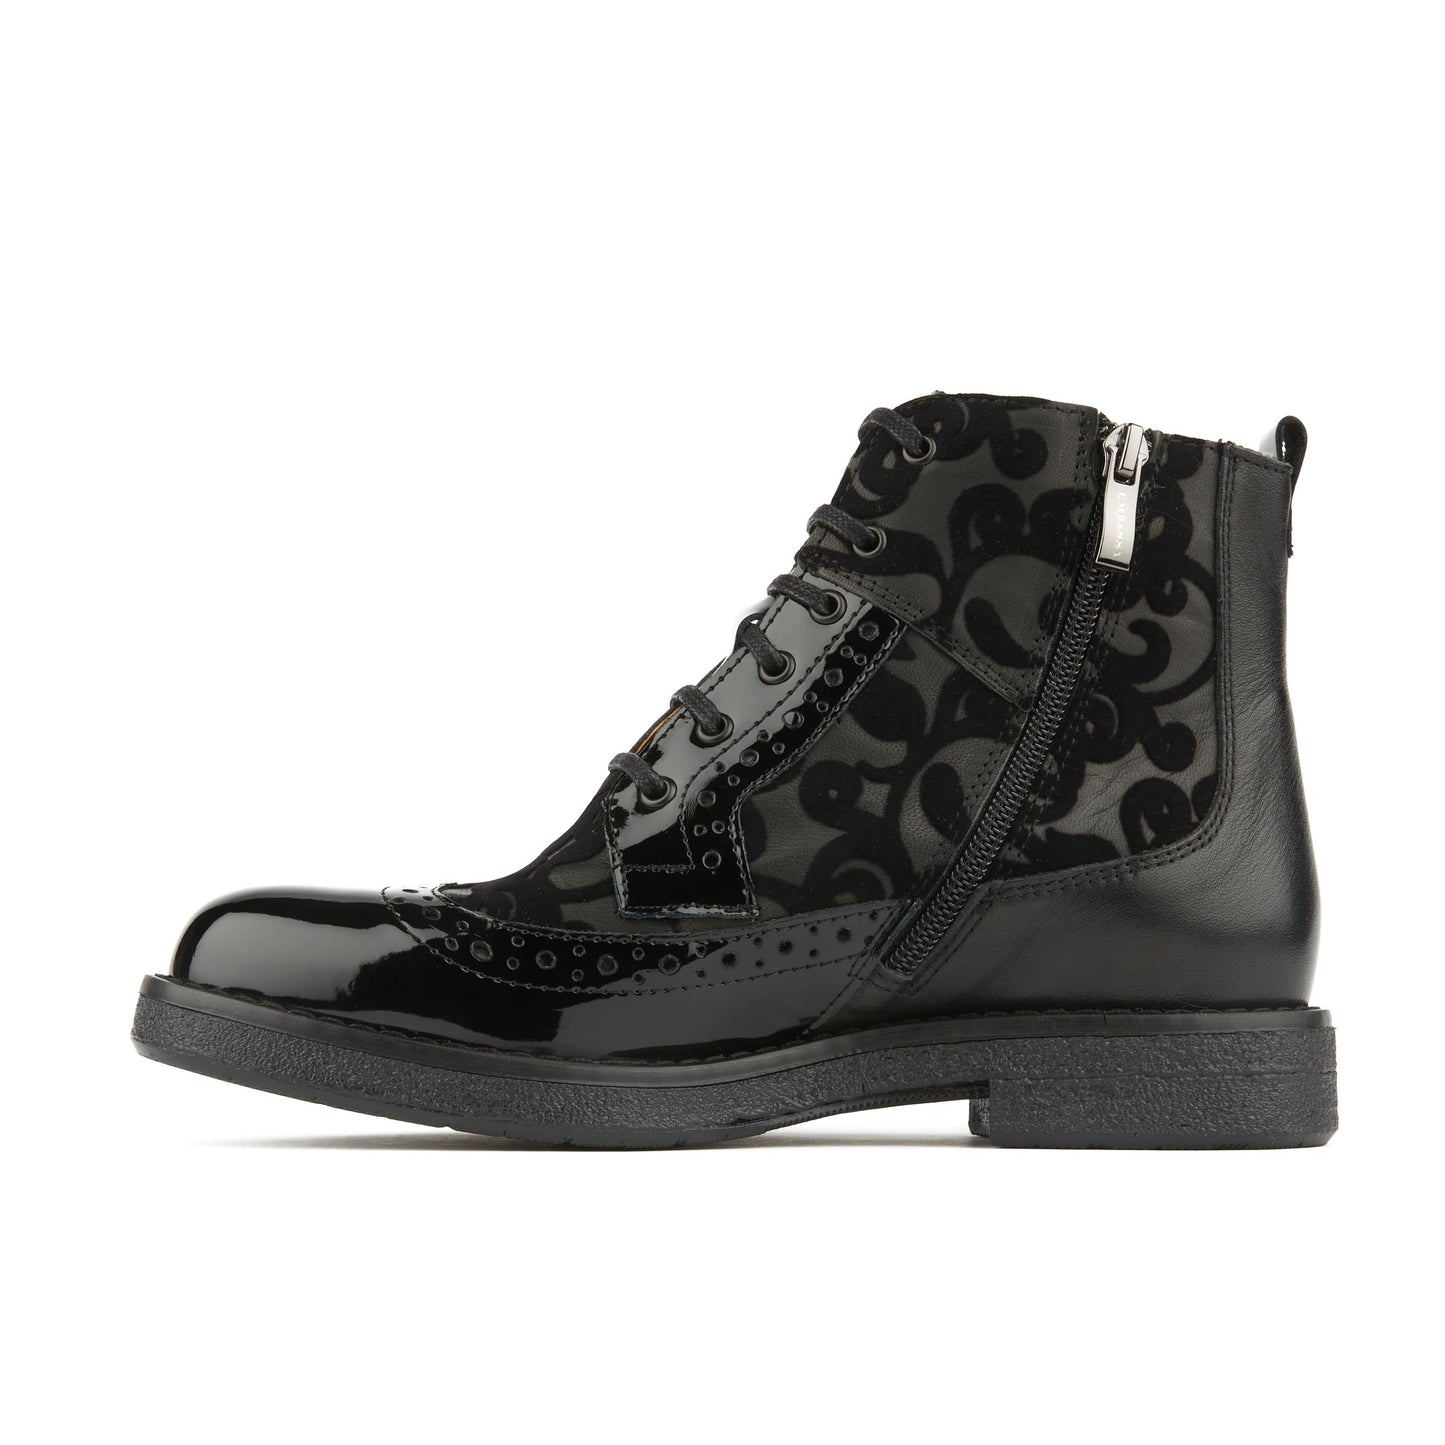 Hatter - Black Floral Ankle Boots Embassy London 